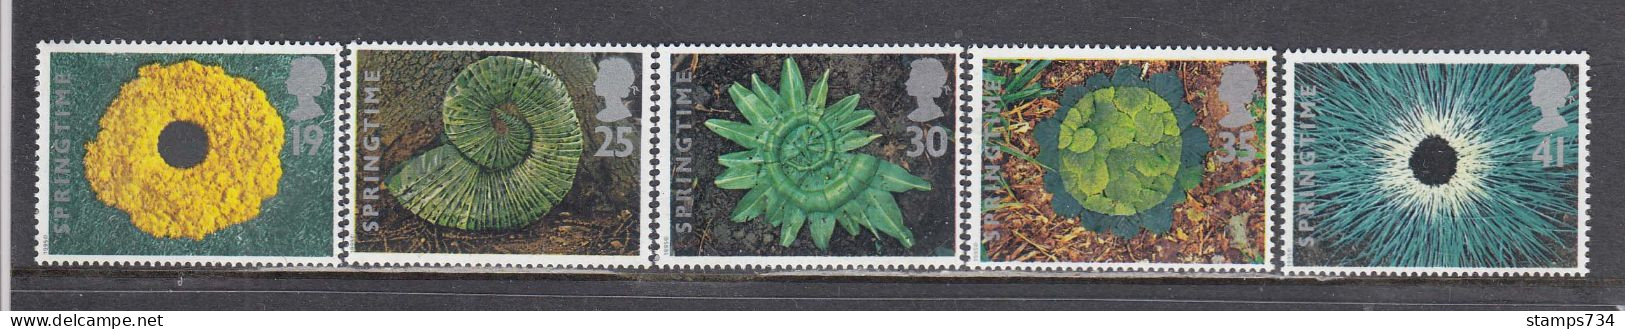 Great Britain 1995 - The Four Seasons: Spring, Set Of 5 Stamps, MNH** - Ongebruikt